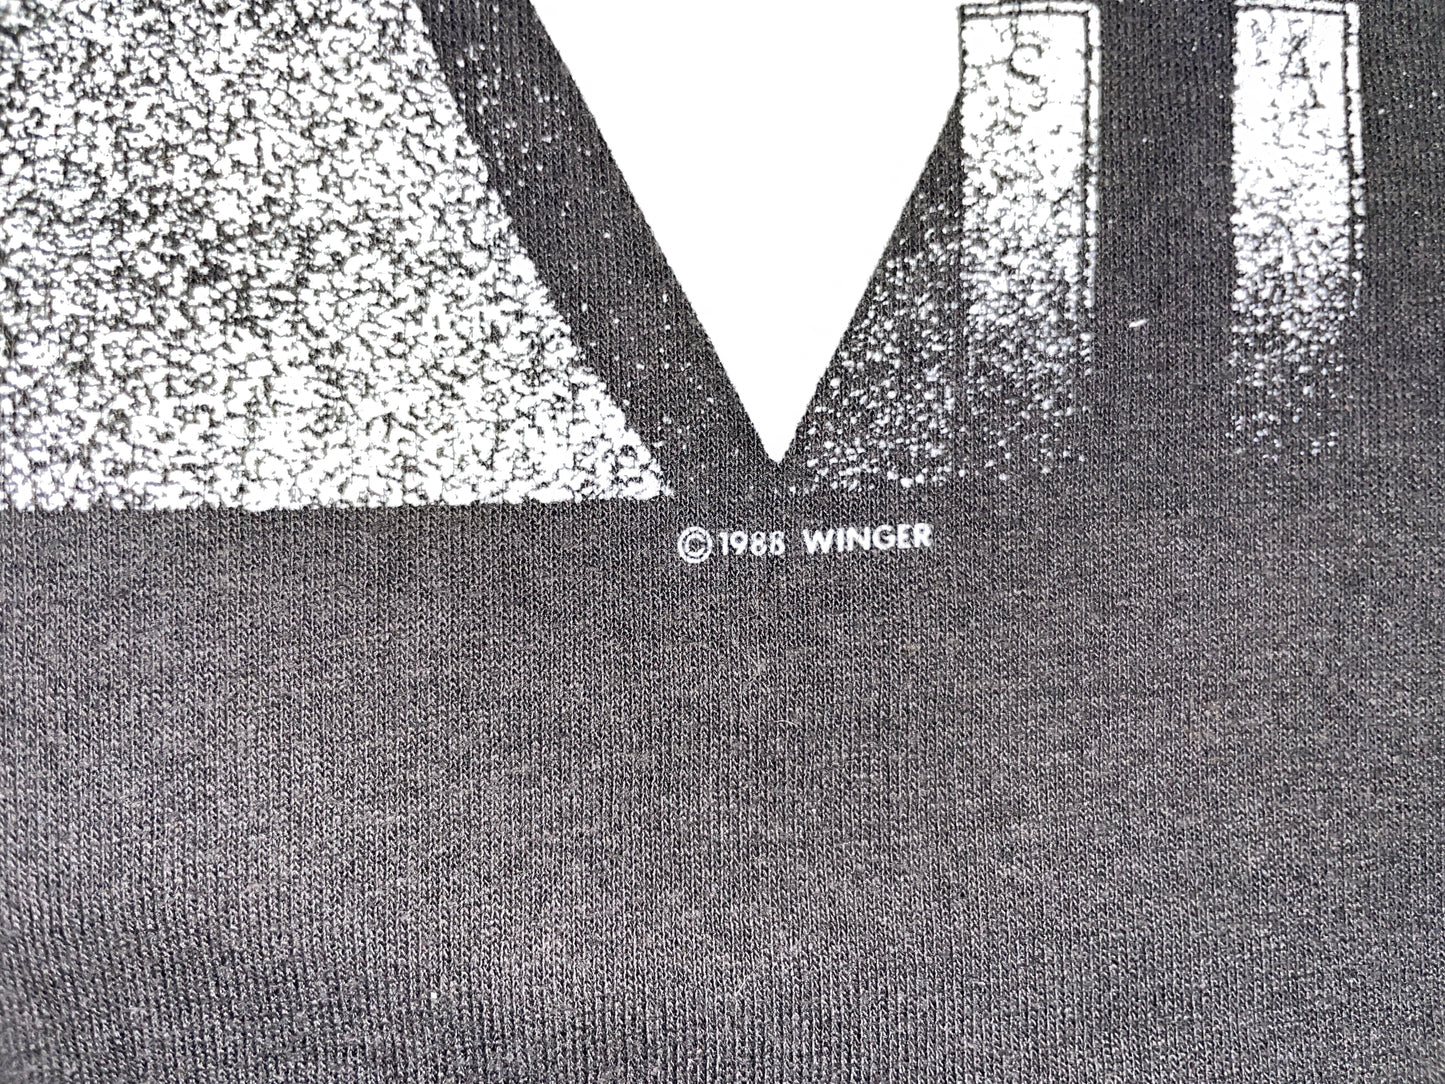 Vintage 1988 Winger Too Tuff To Tame Tour T-Shirt